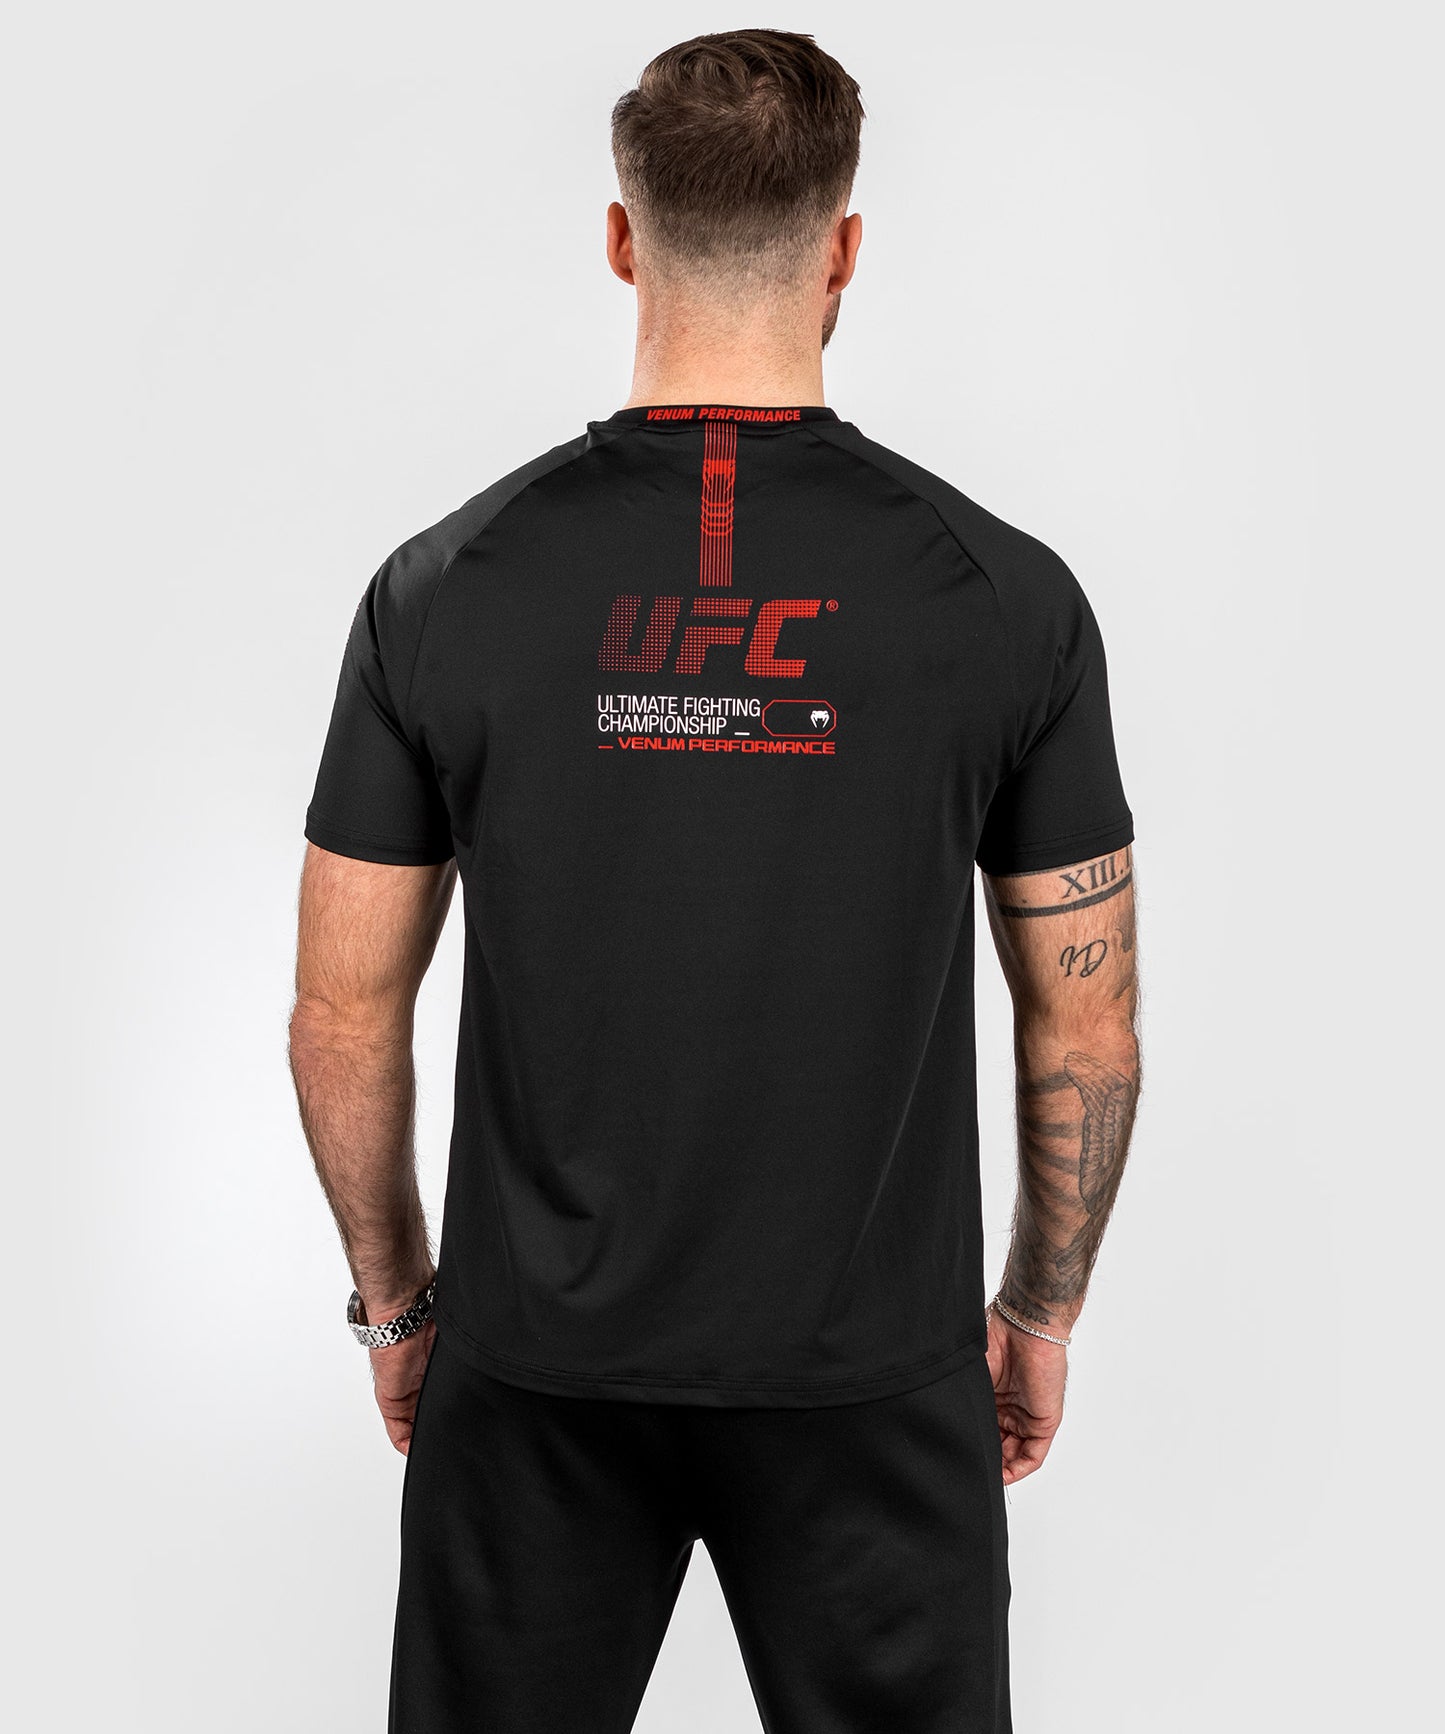 UFC Adrenaline by Venum Fight Week Men’s Dry-tech T-shirt - Black